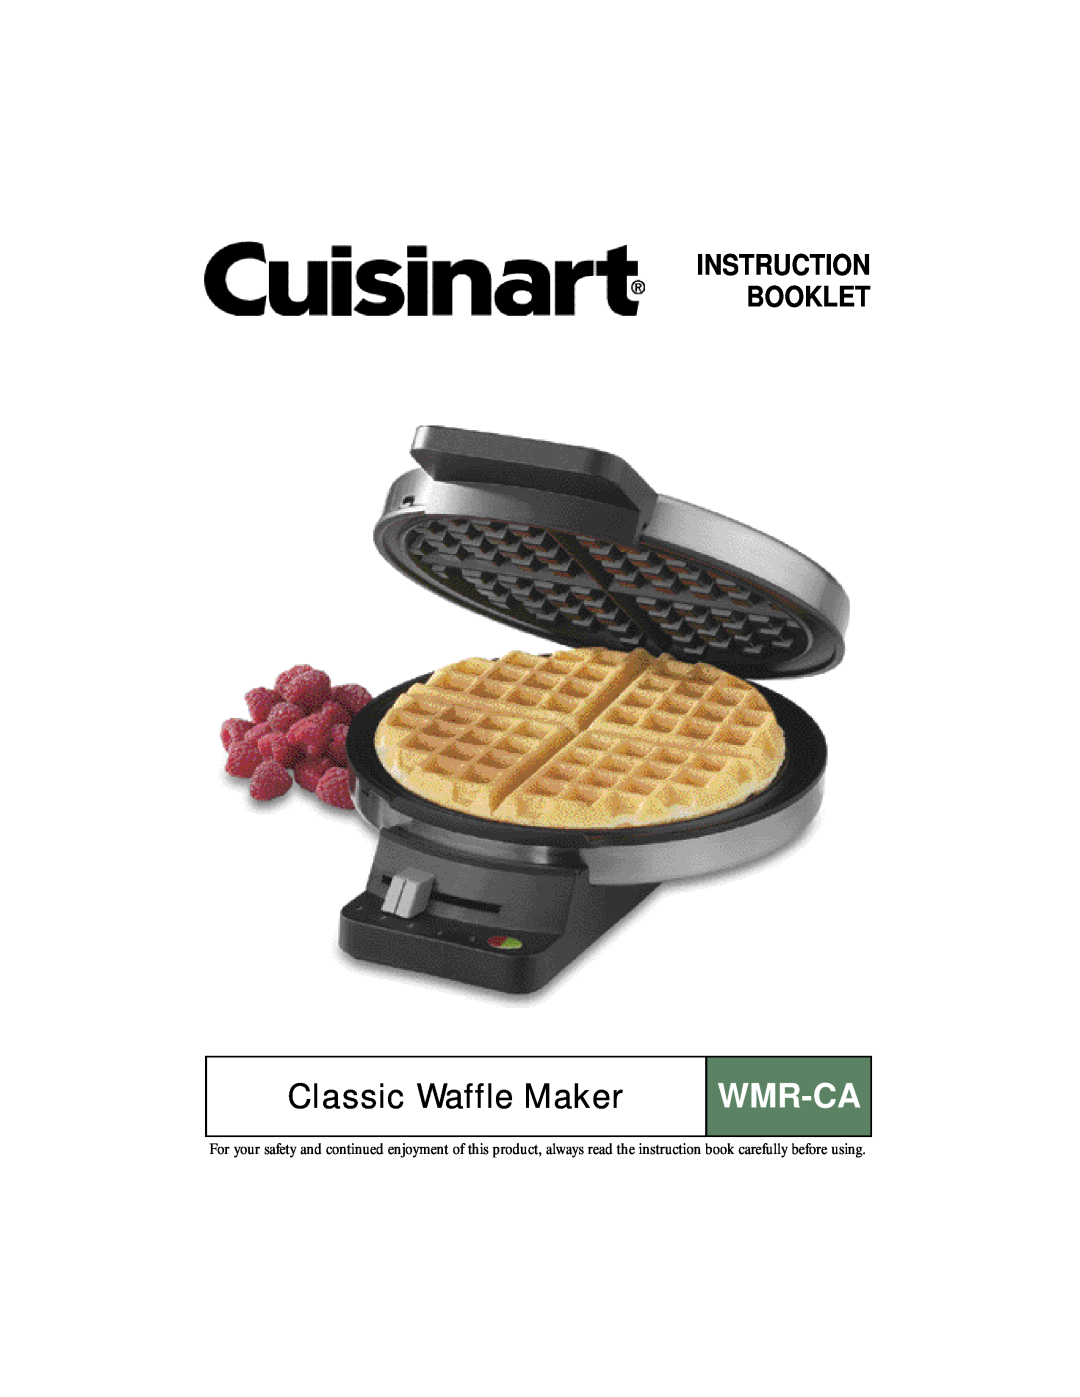 Cuisinart manual Classic Waffle Maker WMR-CA, Instruction Booklet 